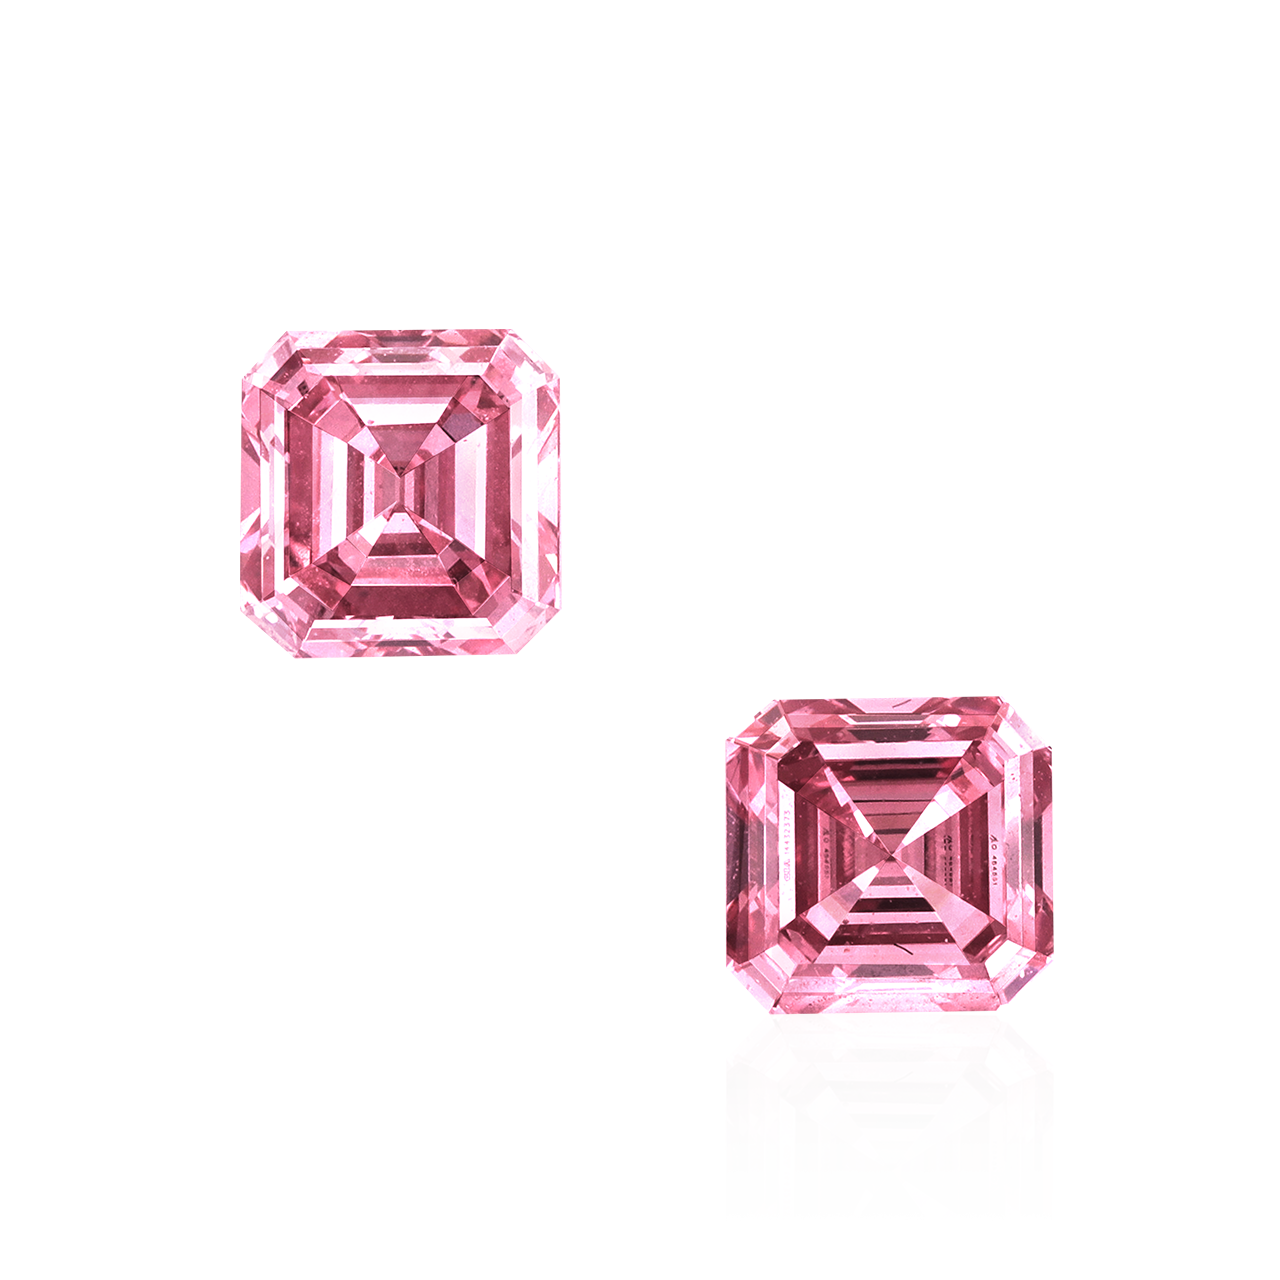 0.55克拉 0.54克拉 阿蓋爾粉鑽裸石
Unmounted Argyle Pink Colored Diamonds